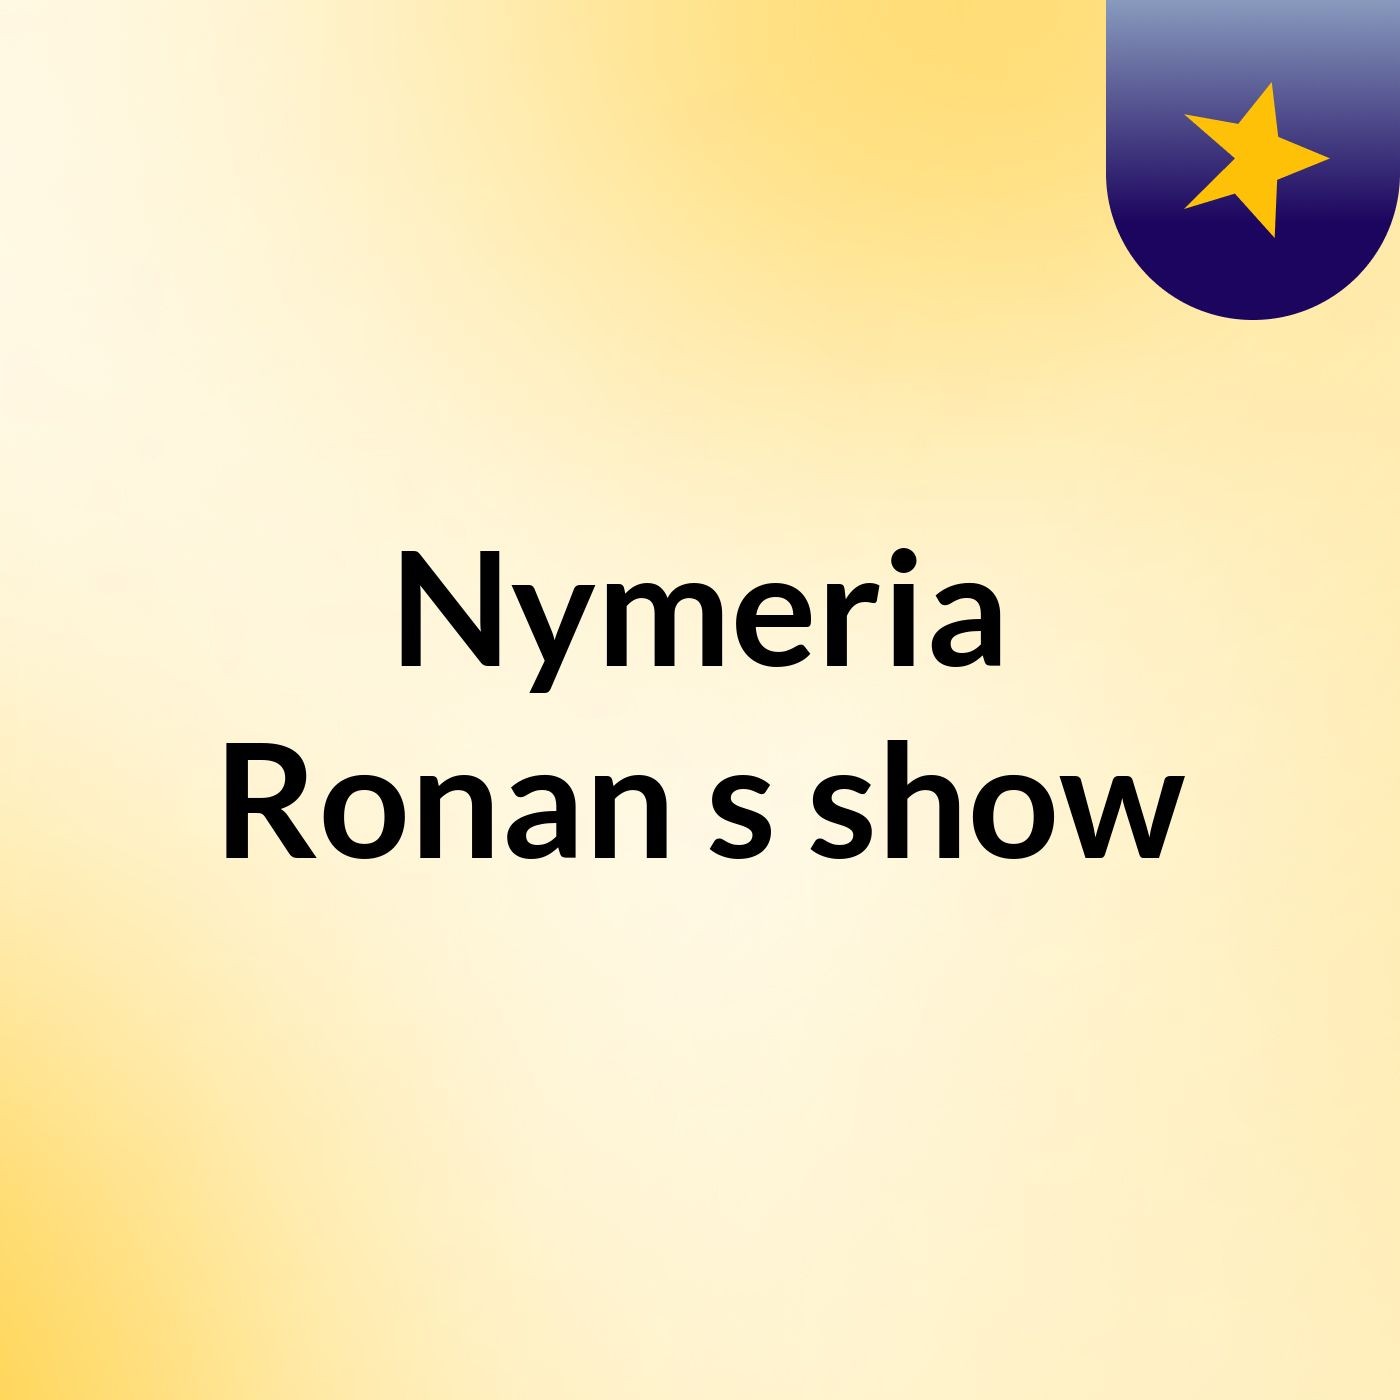 Nymeria Ronan's show